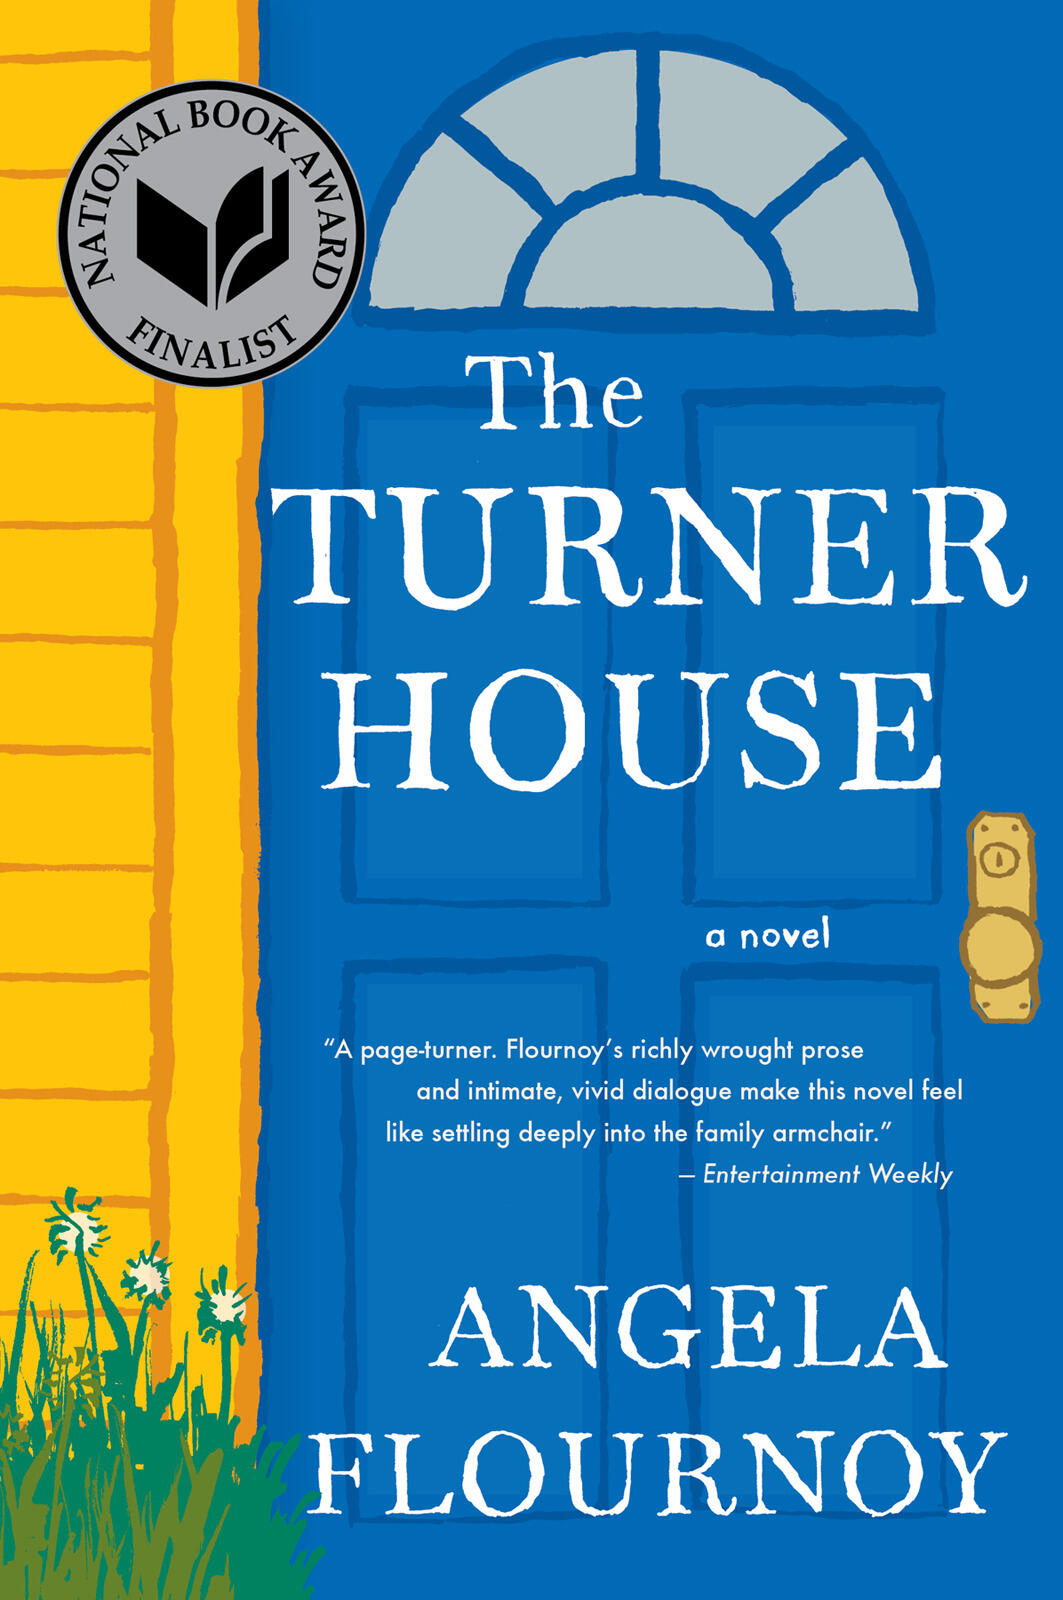 “The Turner House" by Angela Flournoy.